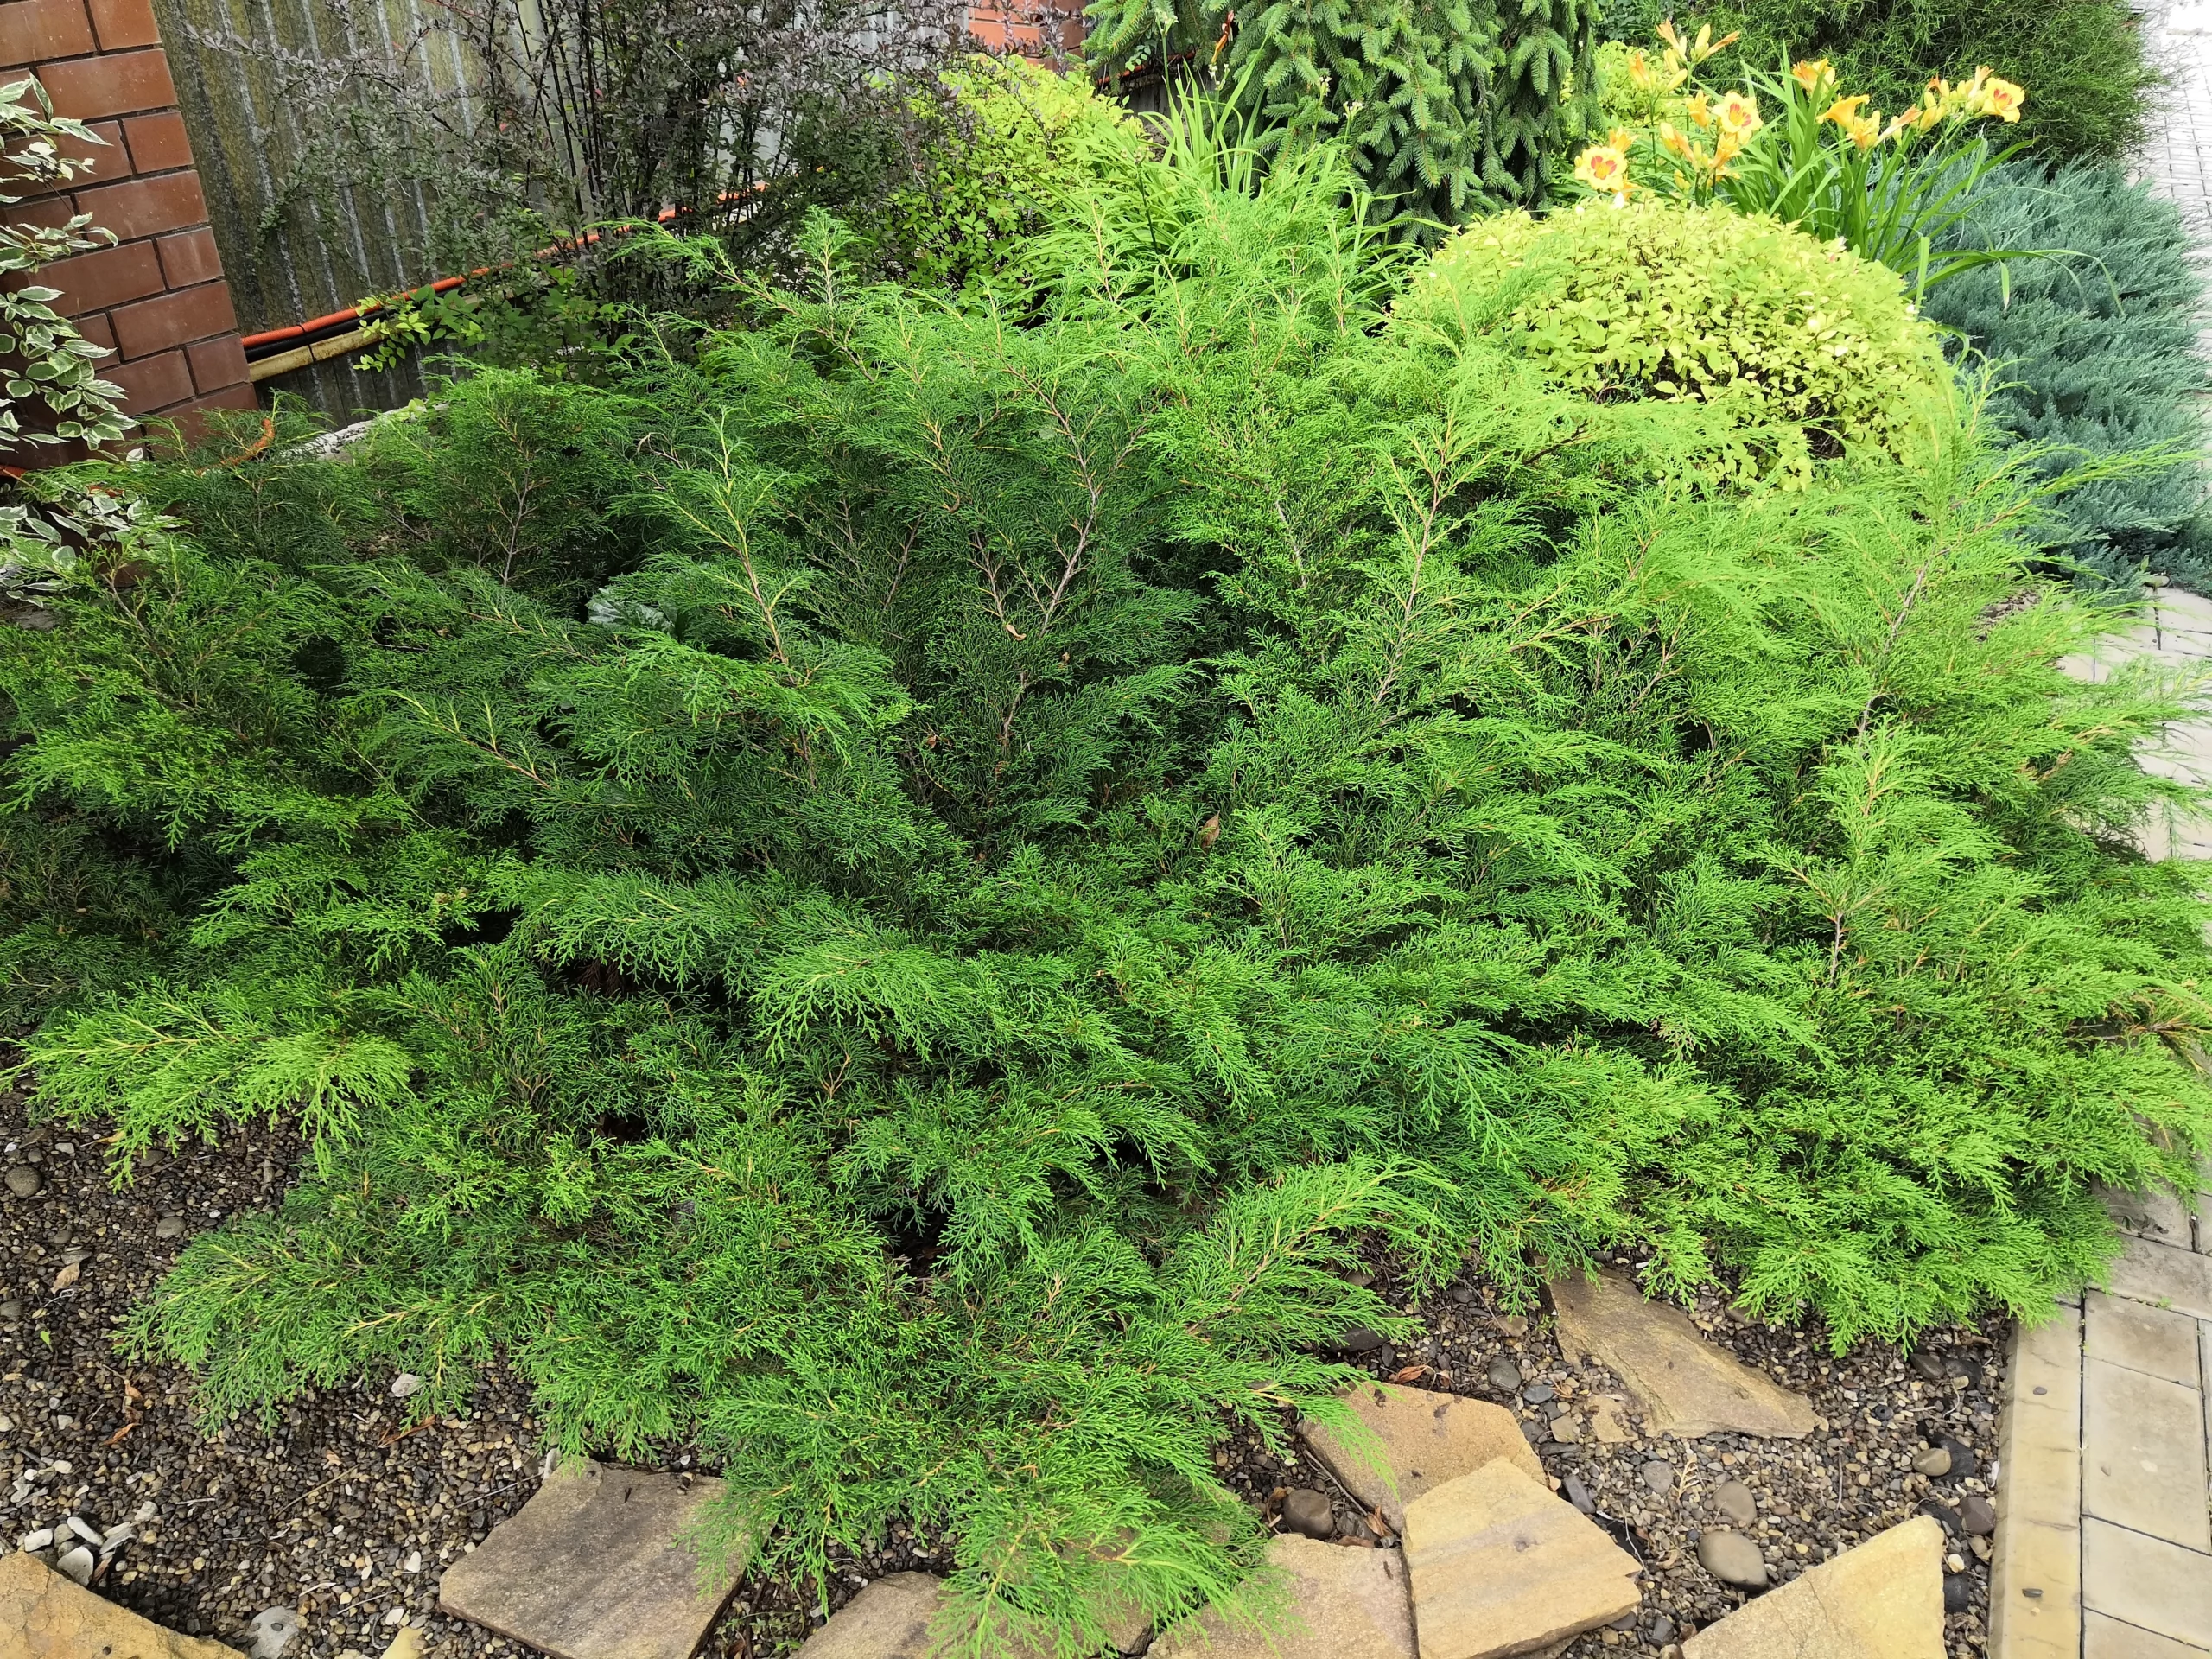 evergreen_shrubs_celtic_pride_siberian_cypress_microbiota_decussata_celtic_pride_plant_by_number